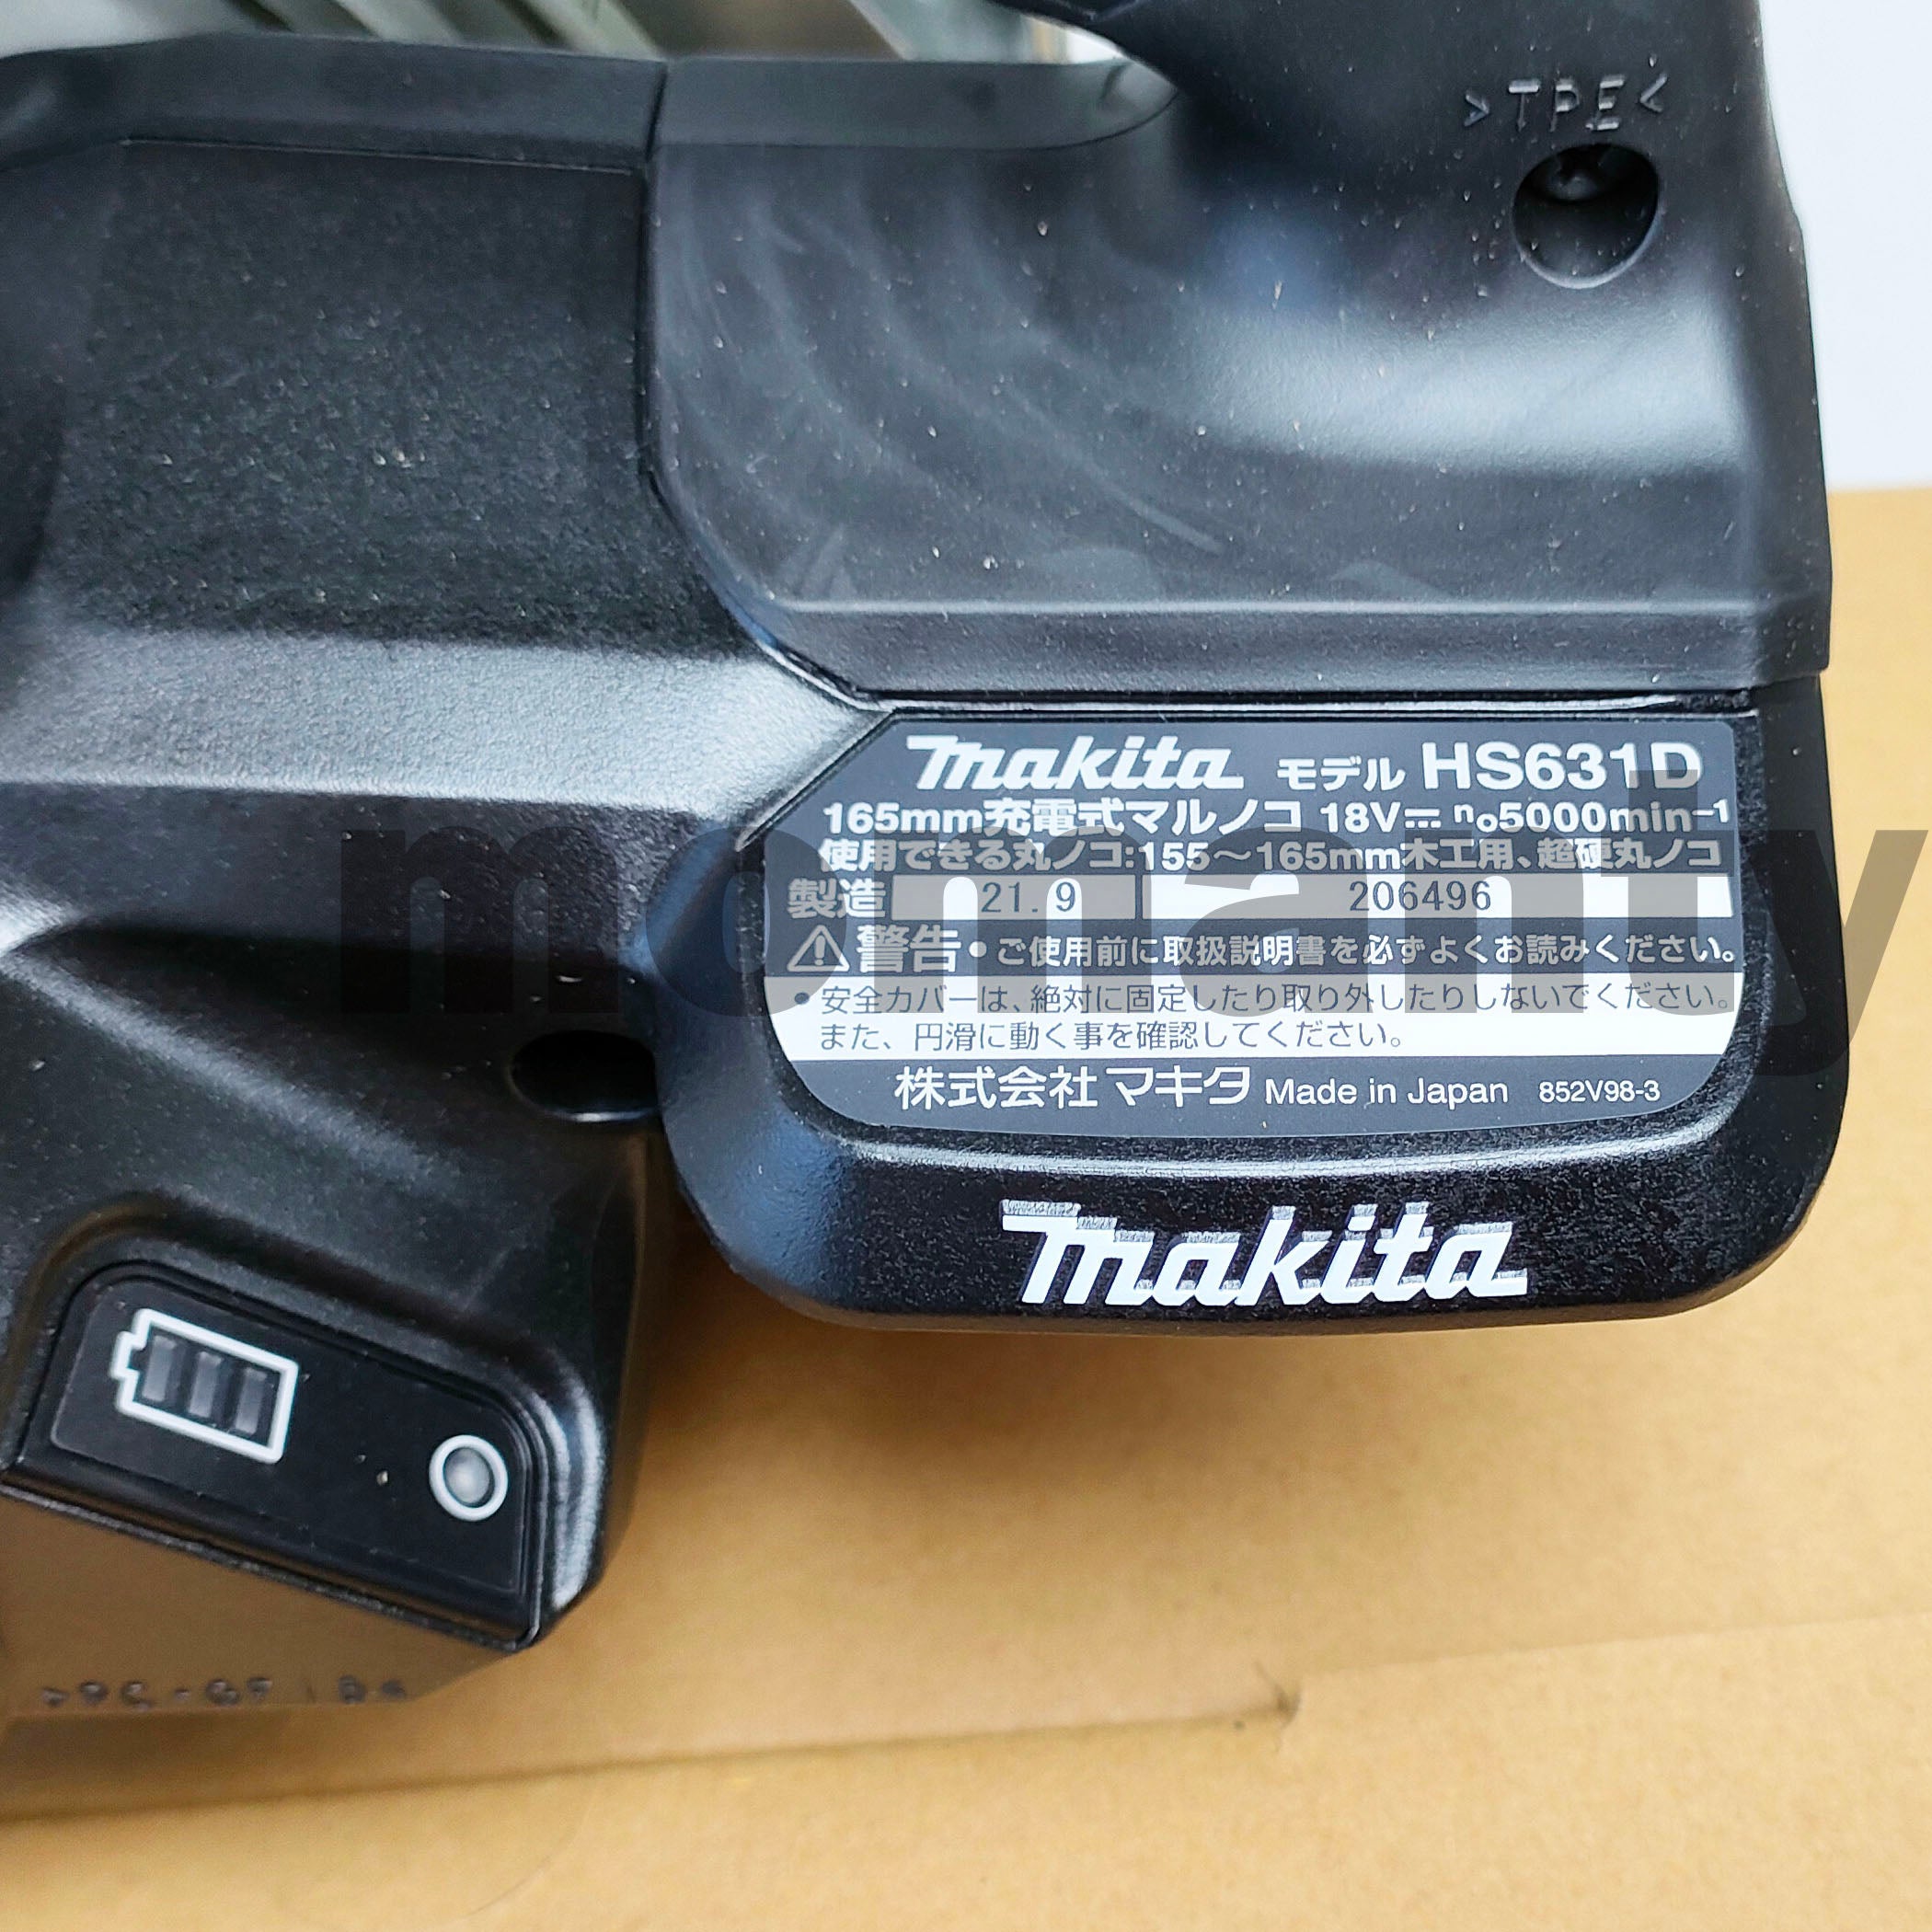 Makita HS631D Rechargeable Circular Saw 18V Black HS631DZSB 165mm Tool Only